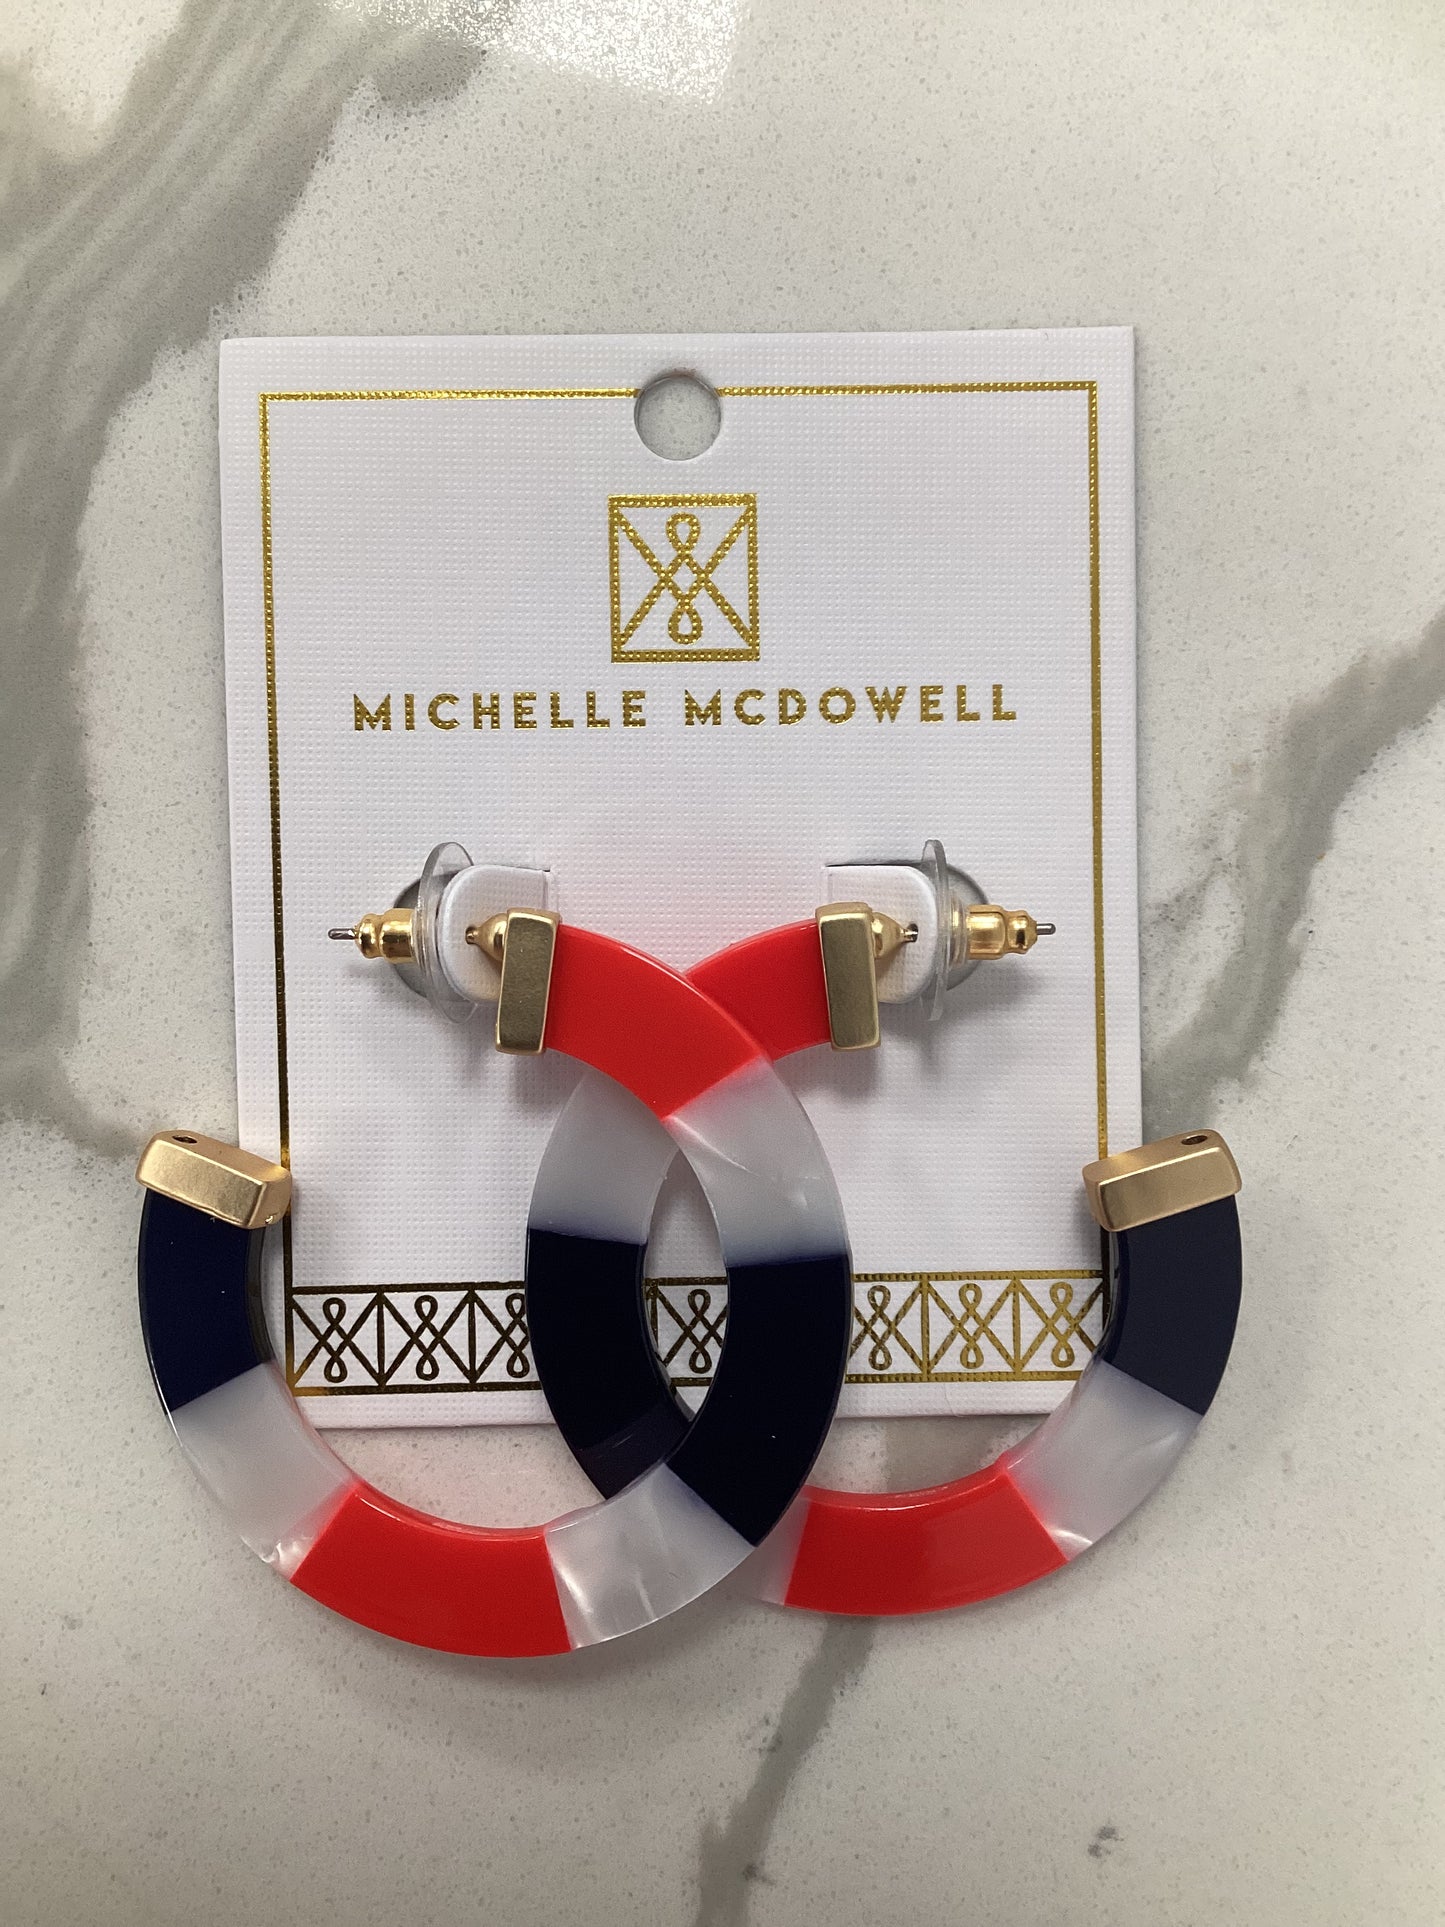 Michelle McDowell hoop/dangle